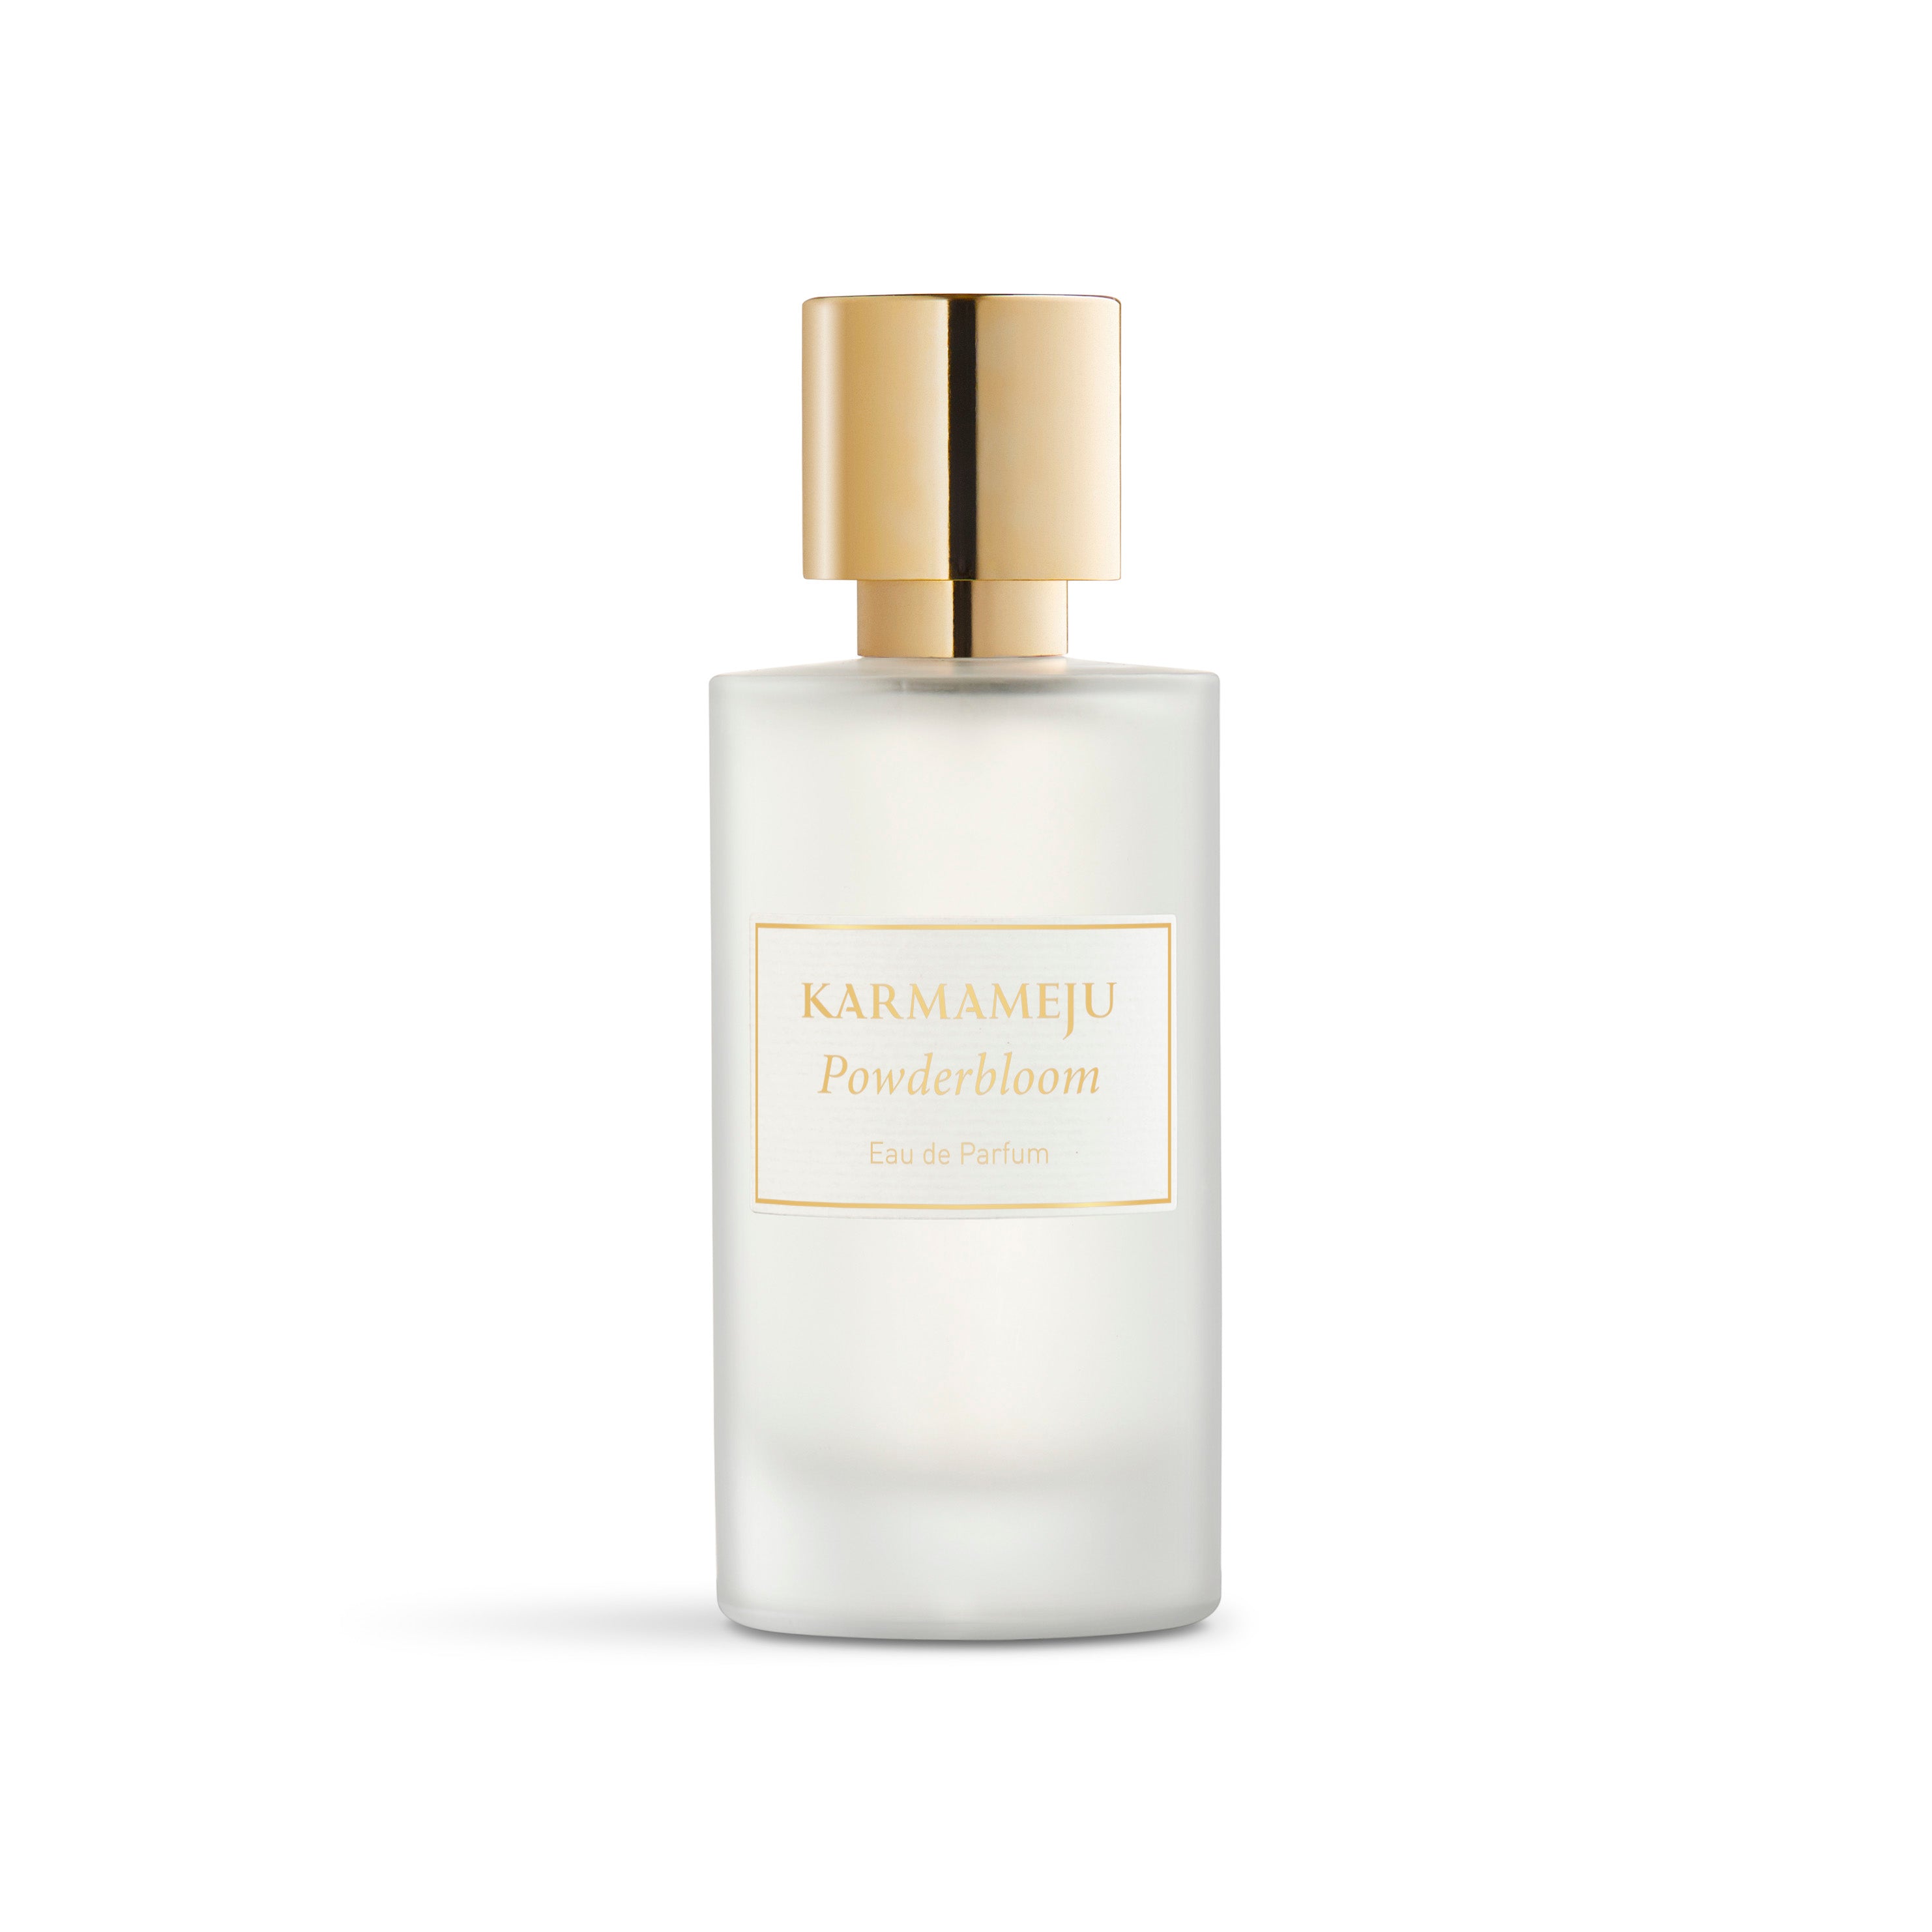 POWDERBLOOM / Eau de Parfum 50 ml.